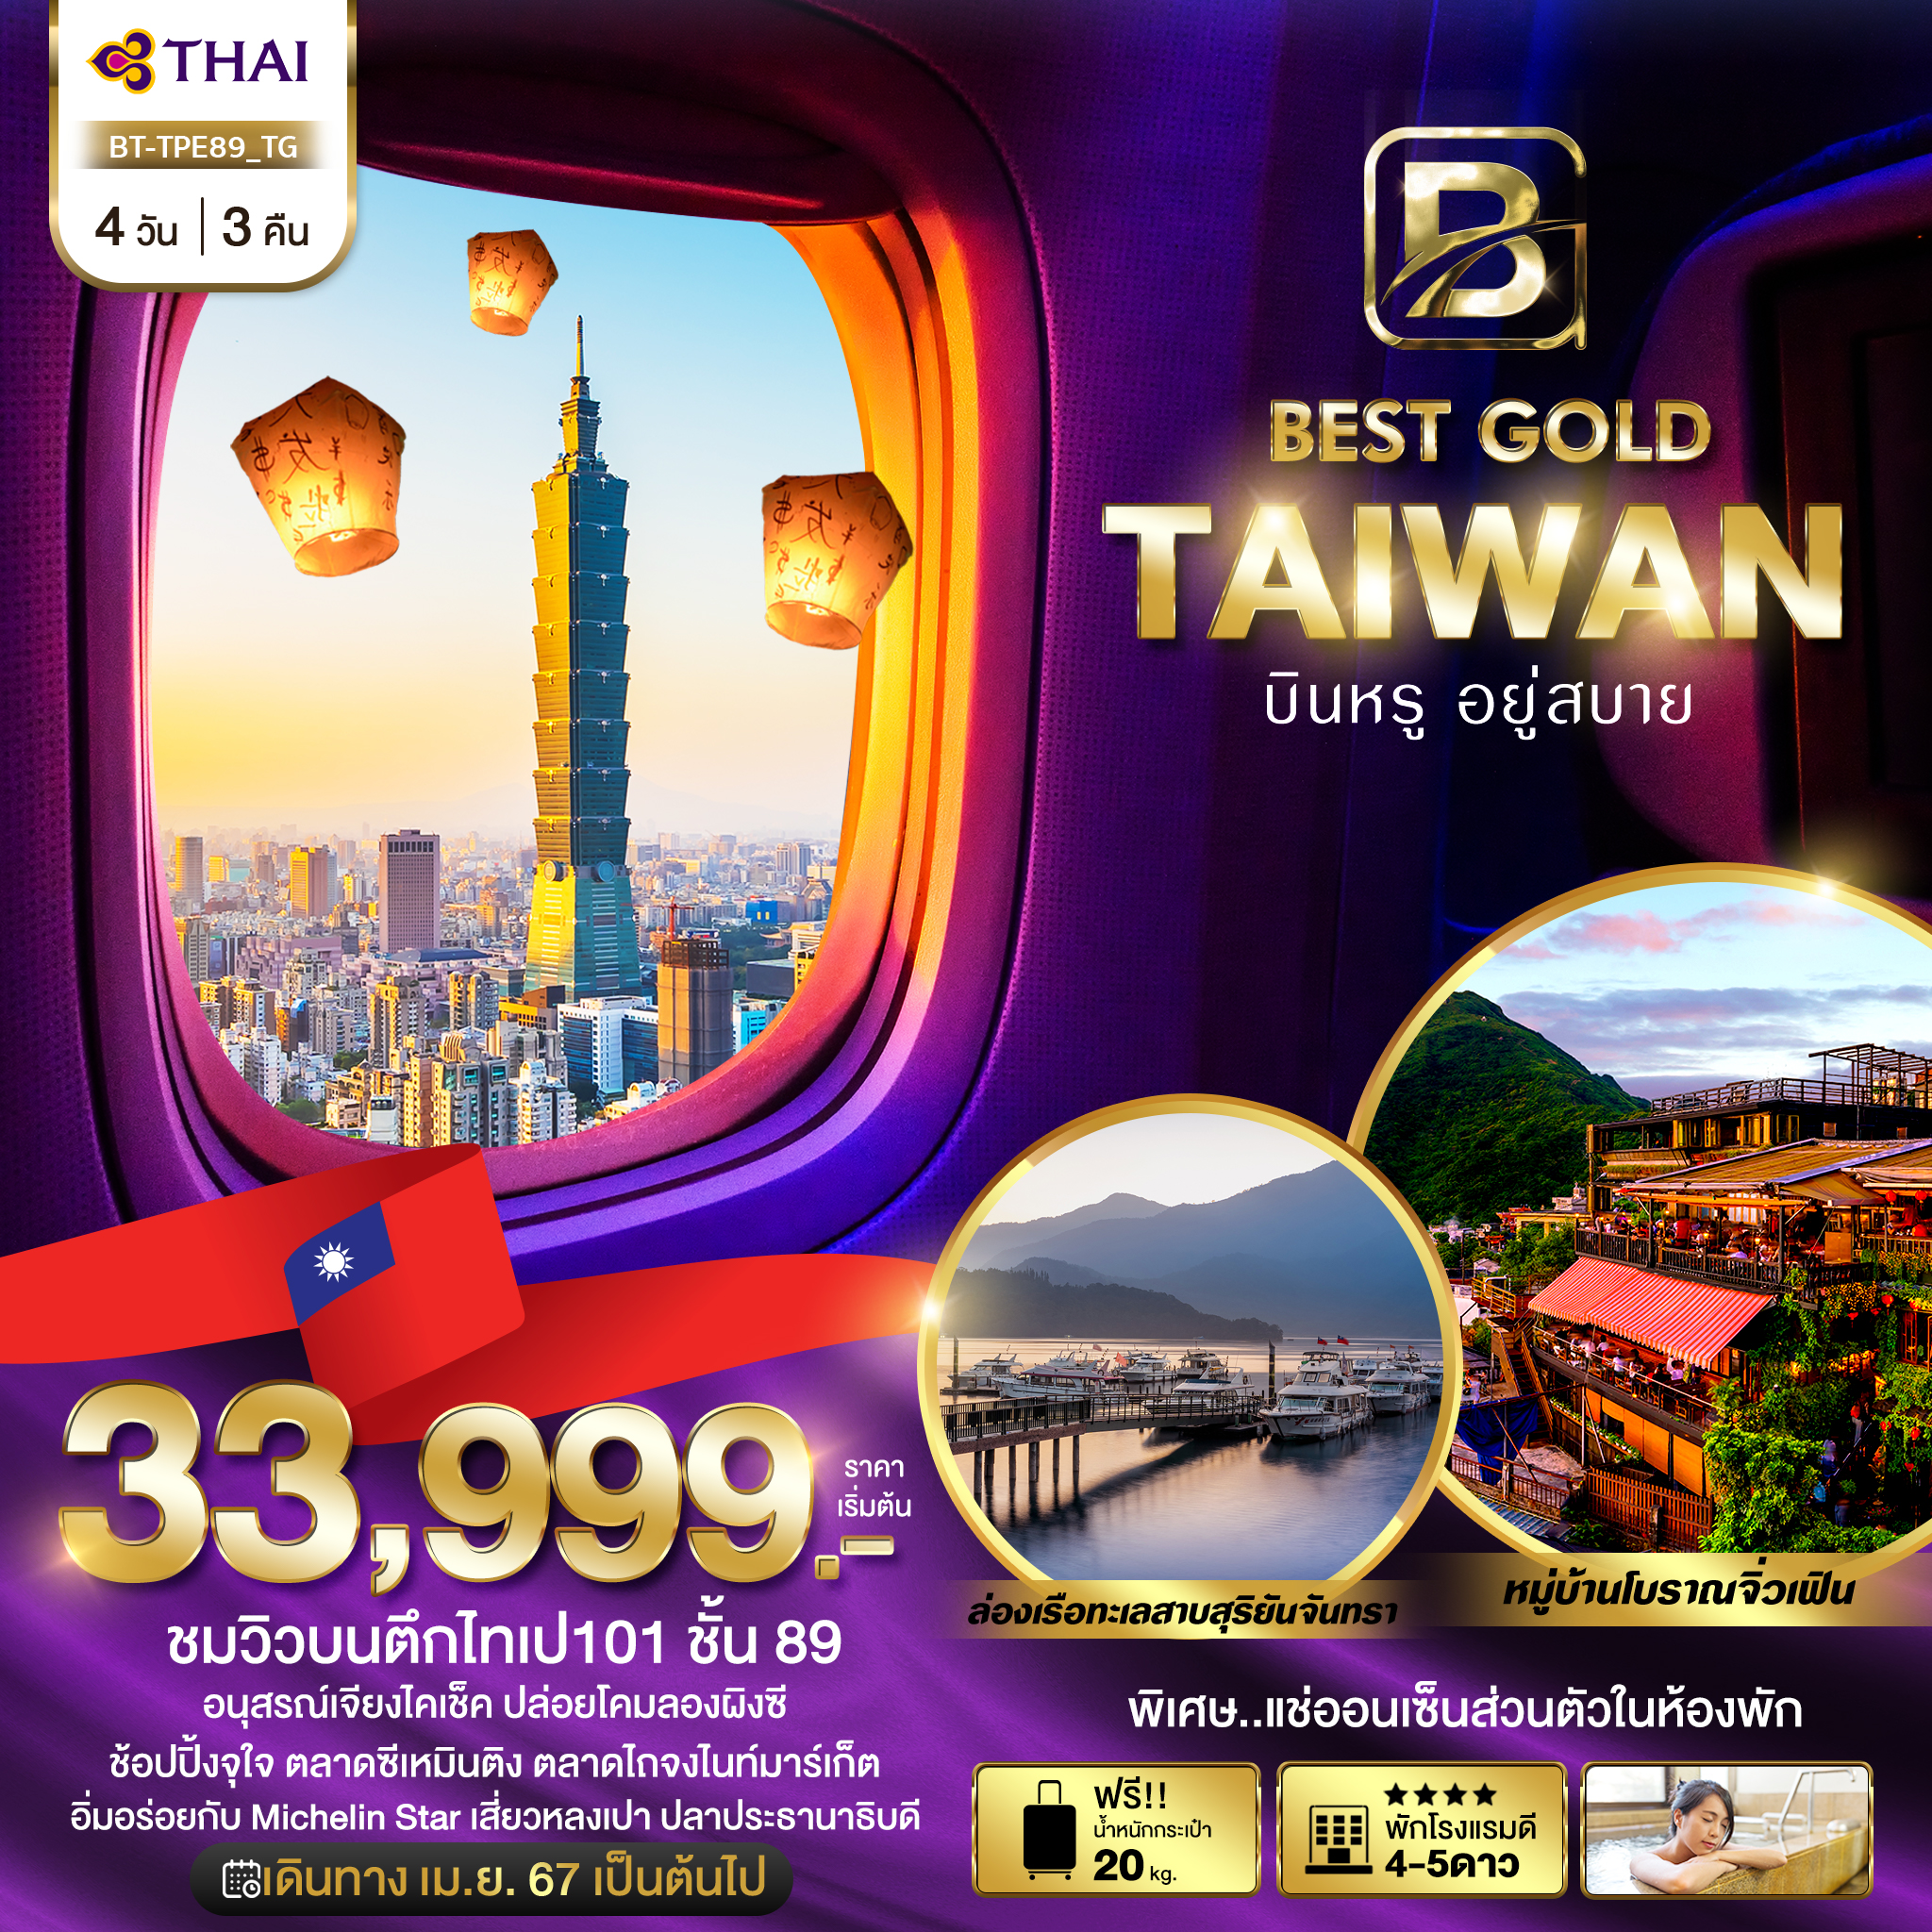 BT-TPE89_TG มหัศจรรย์...BEST GOLD TAIWAN บินหรู อยู่สบาย